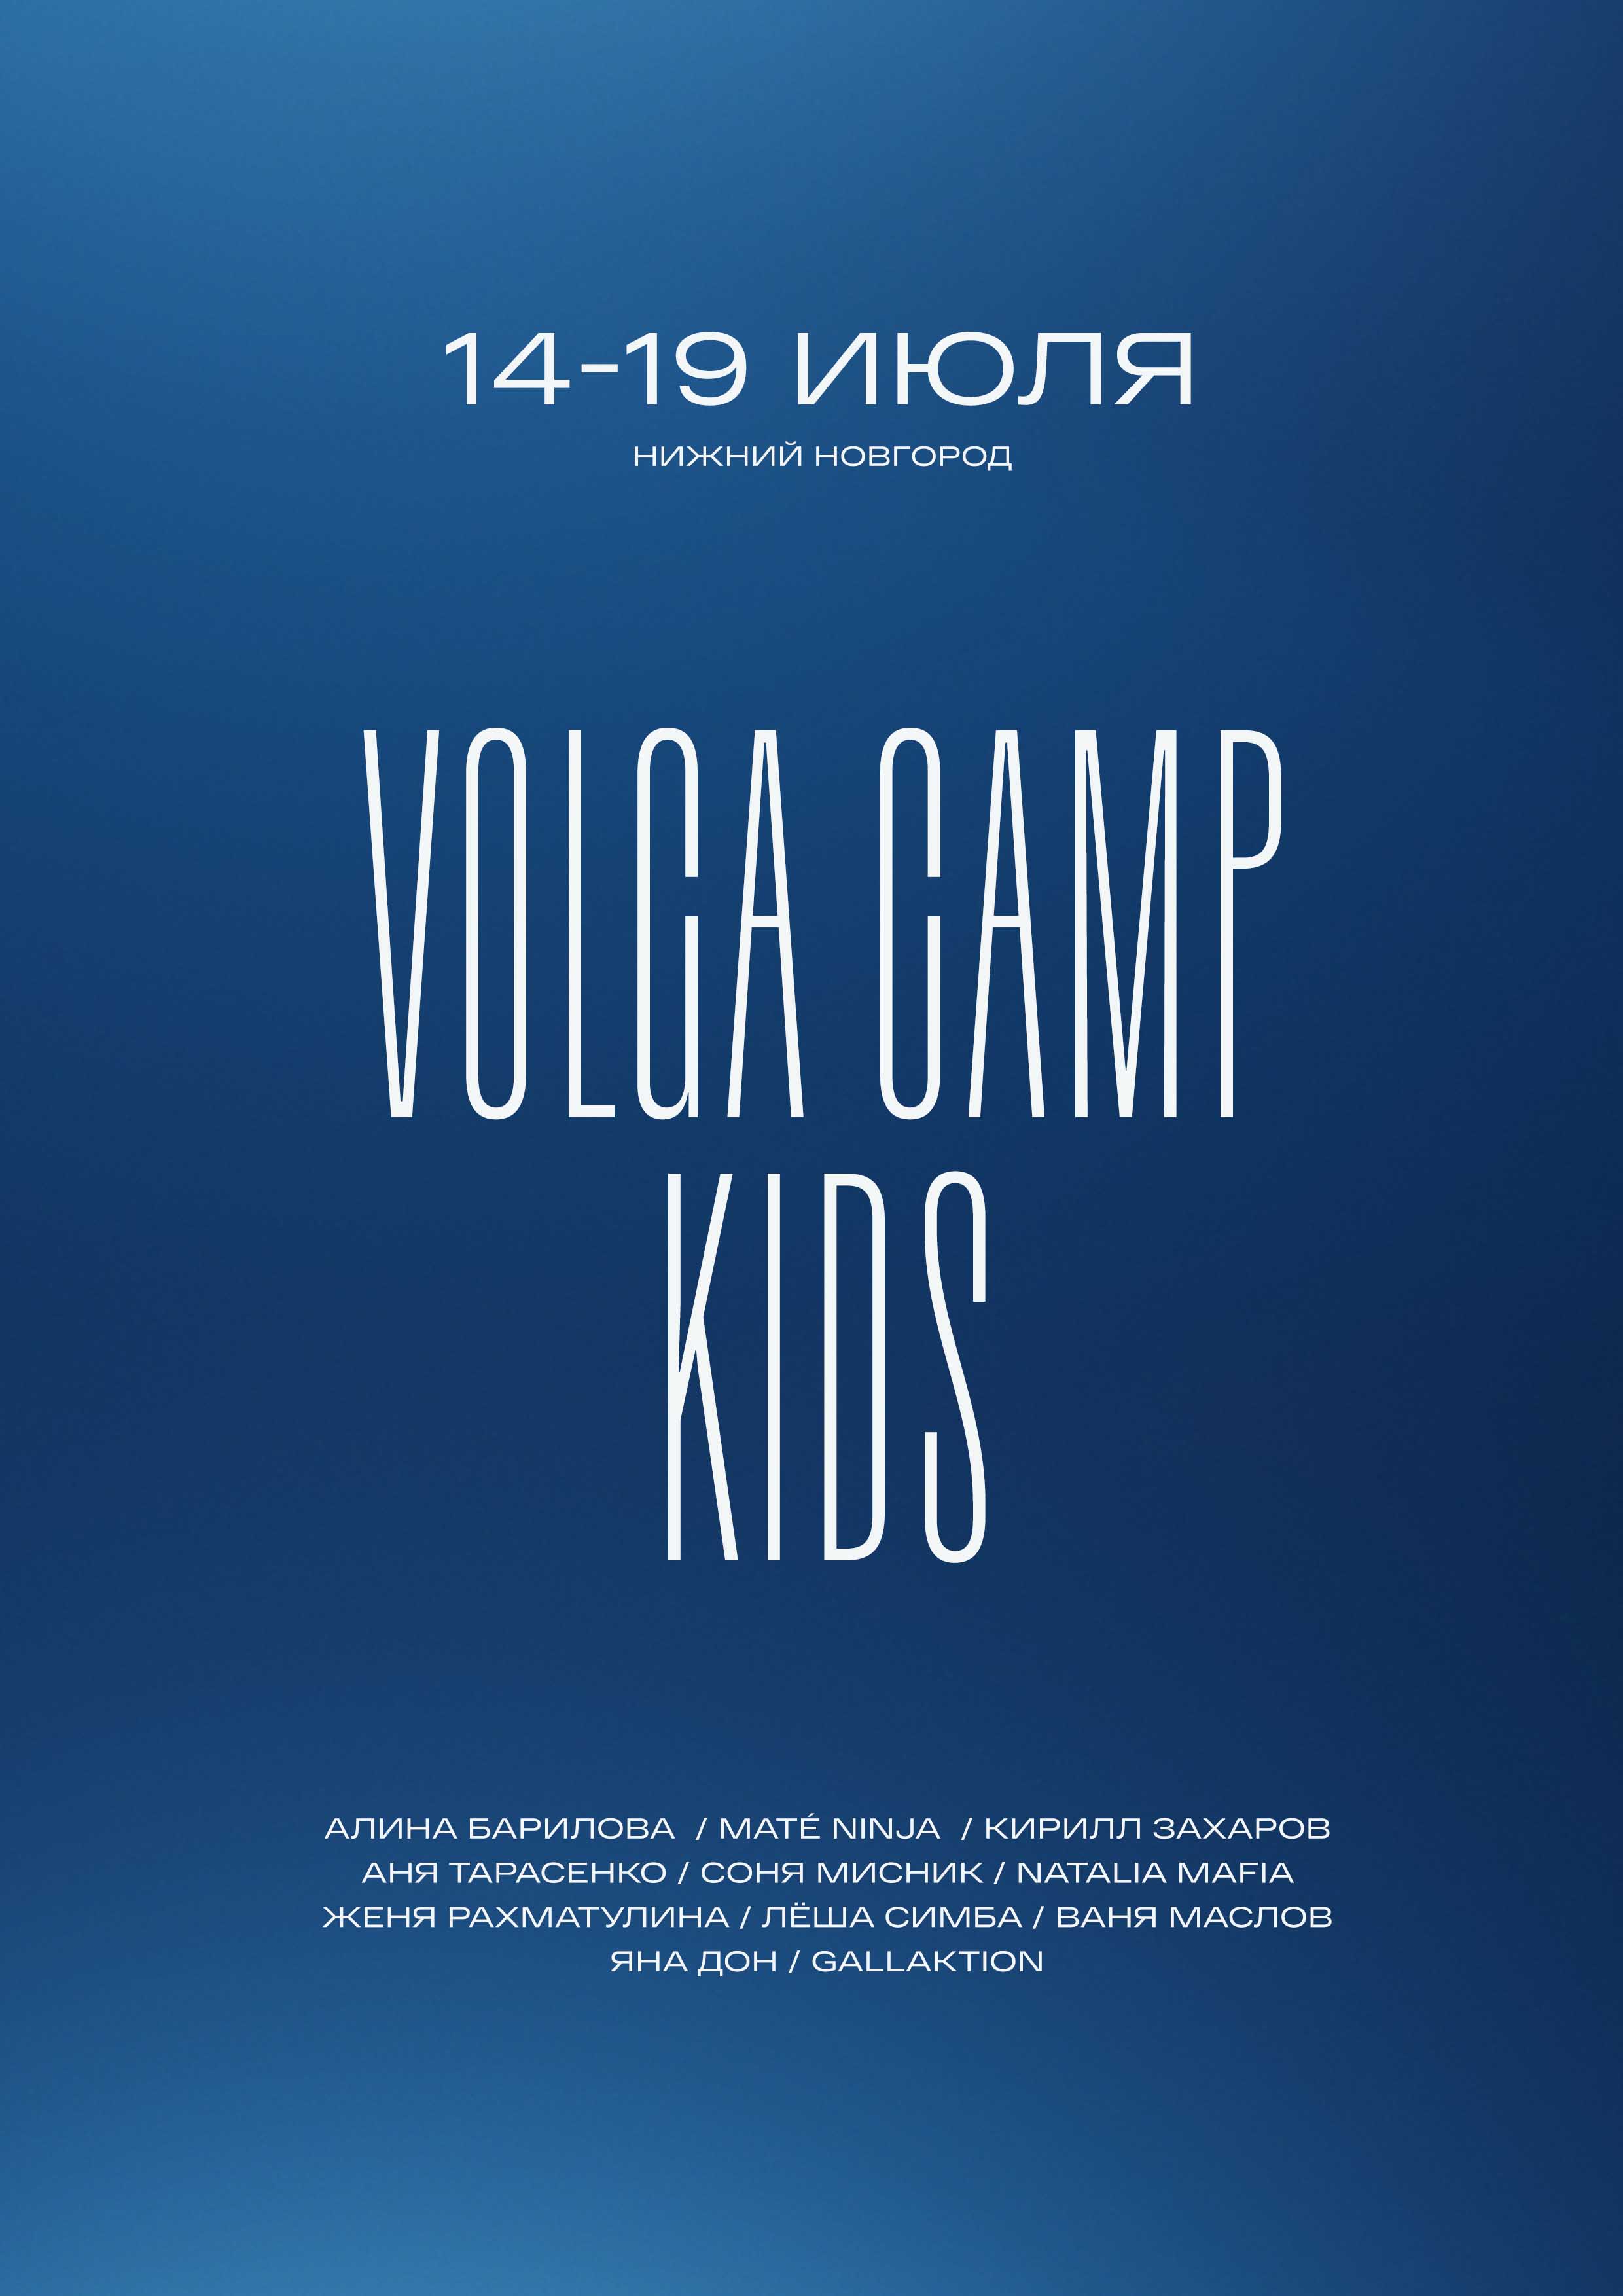 Volga Camp Kids